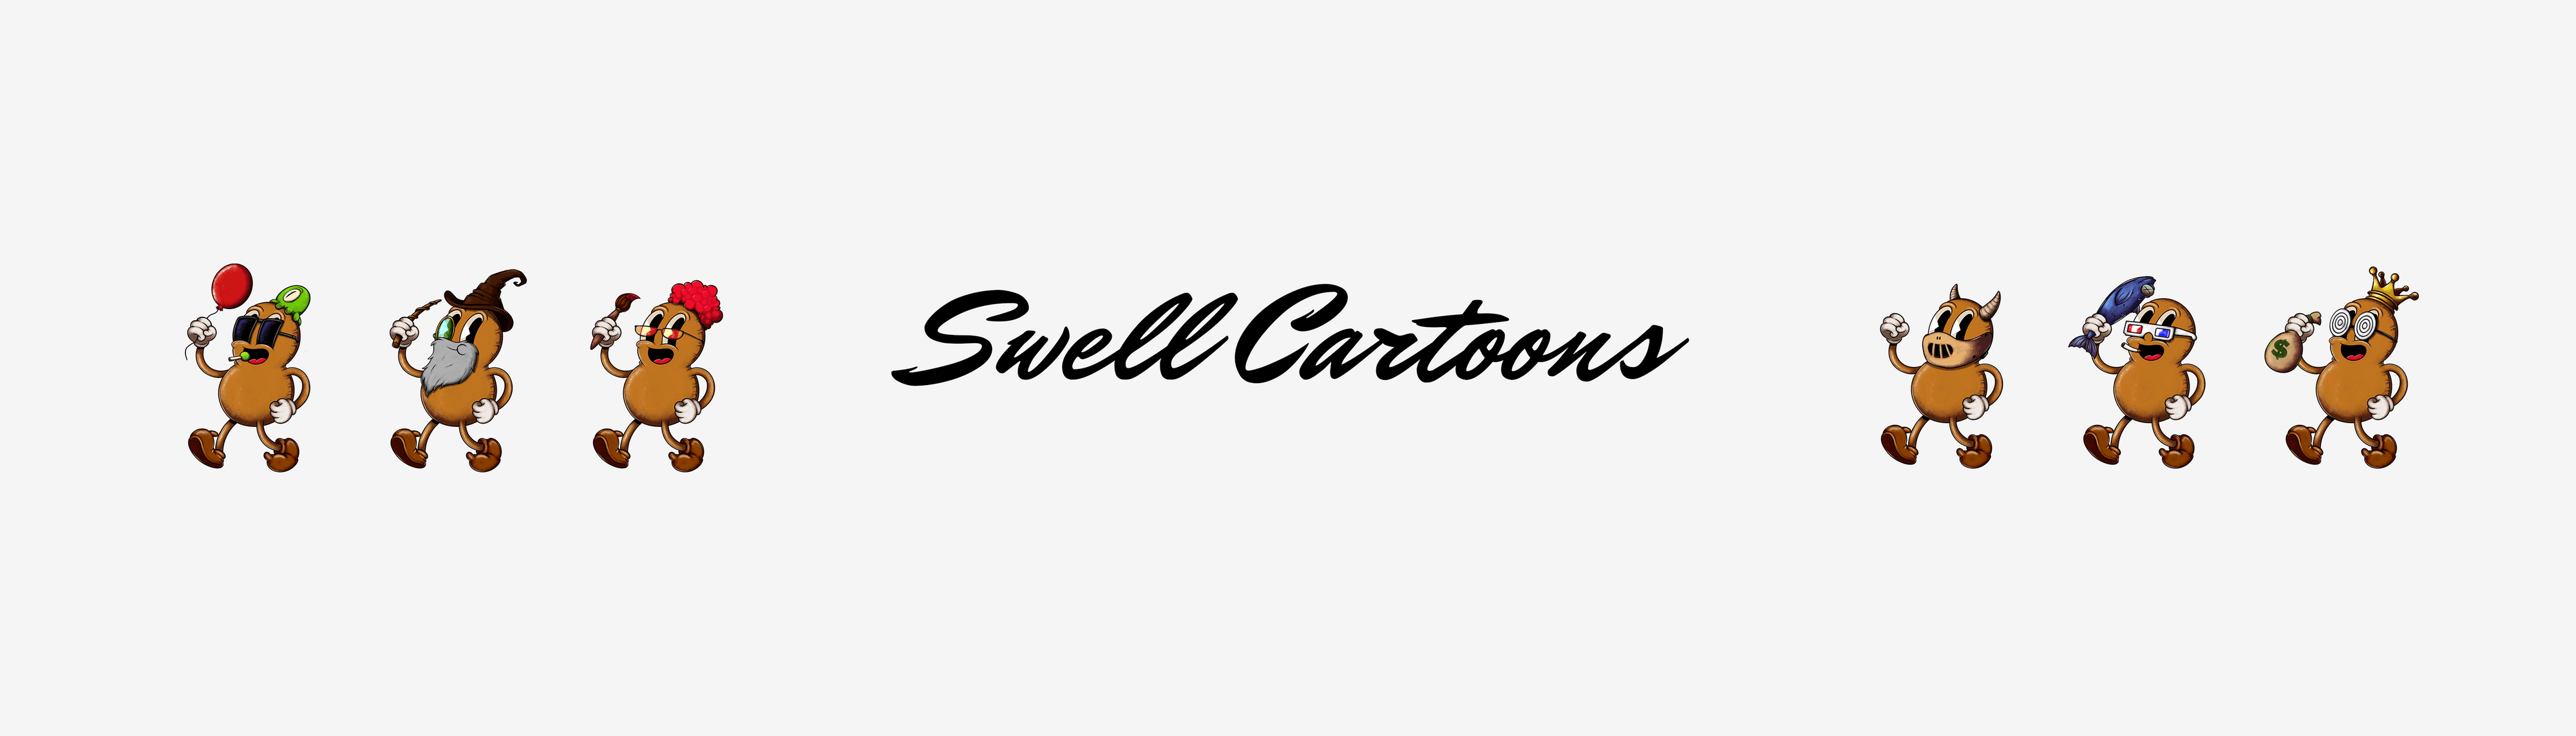 SwellCartoons banner